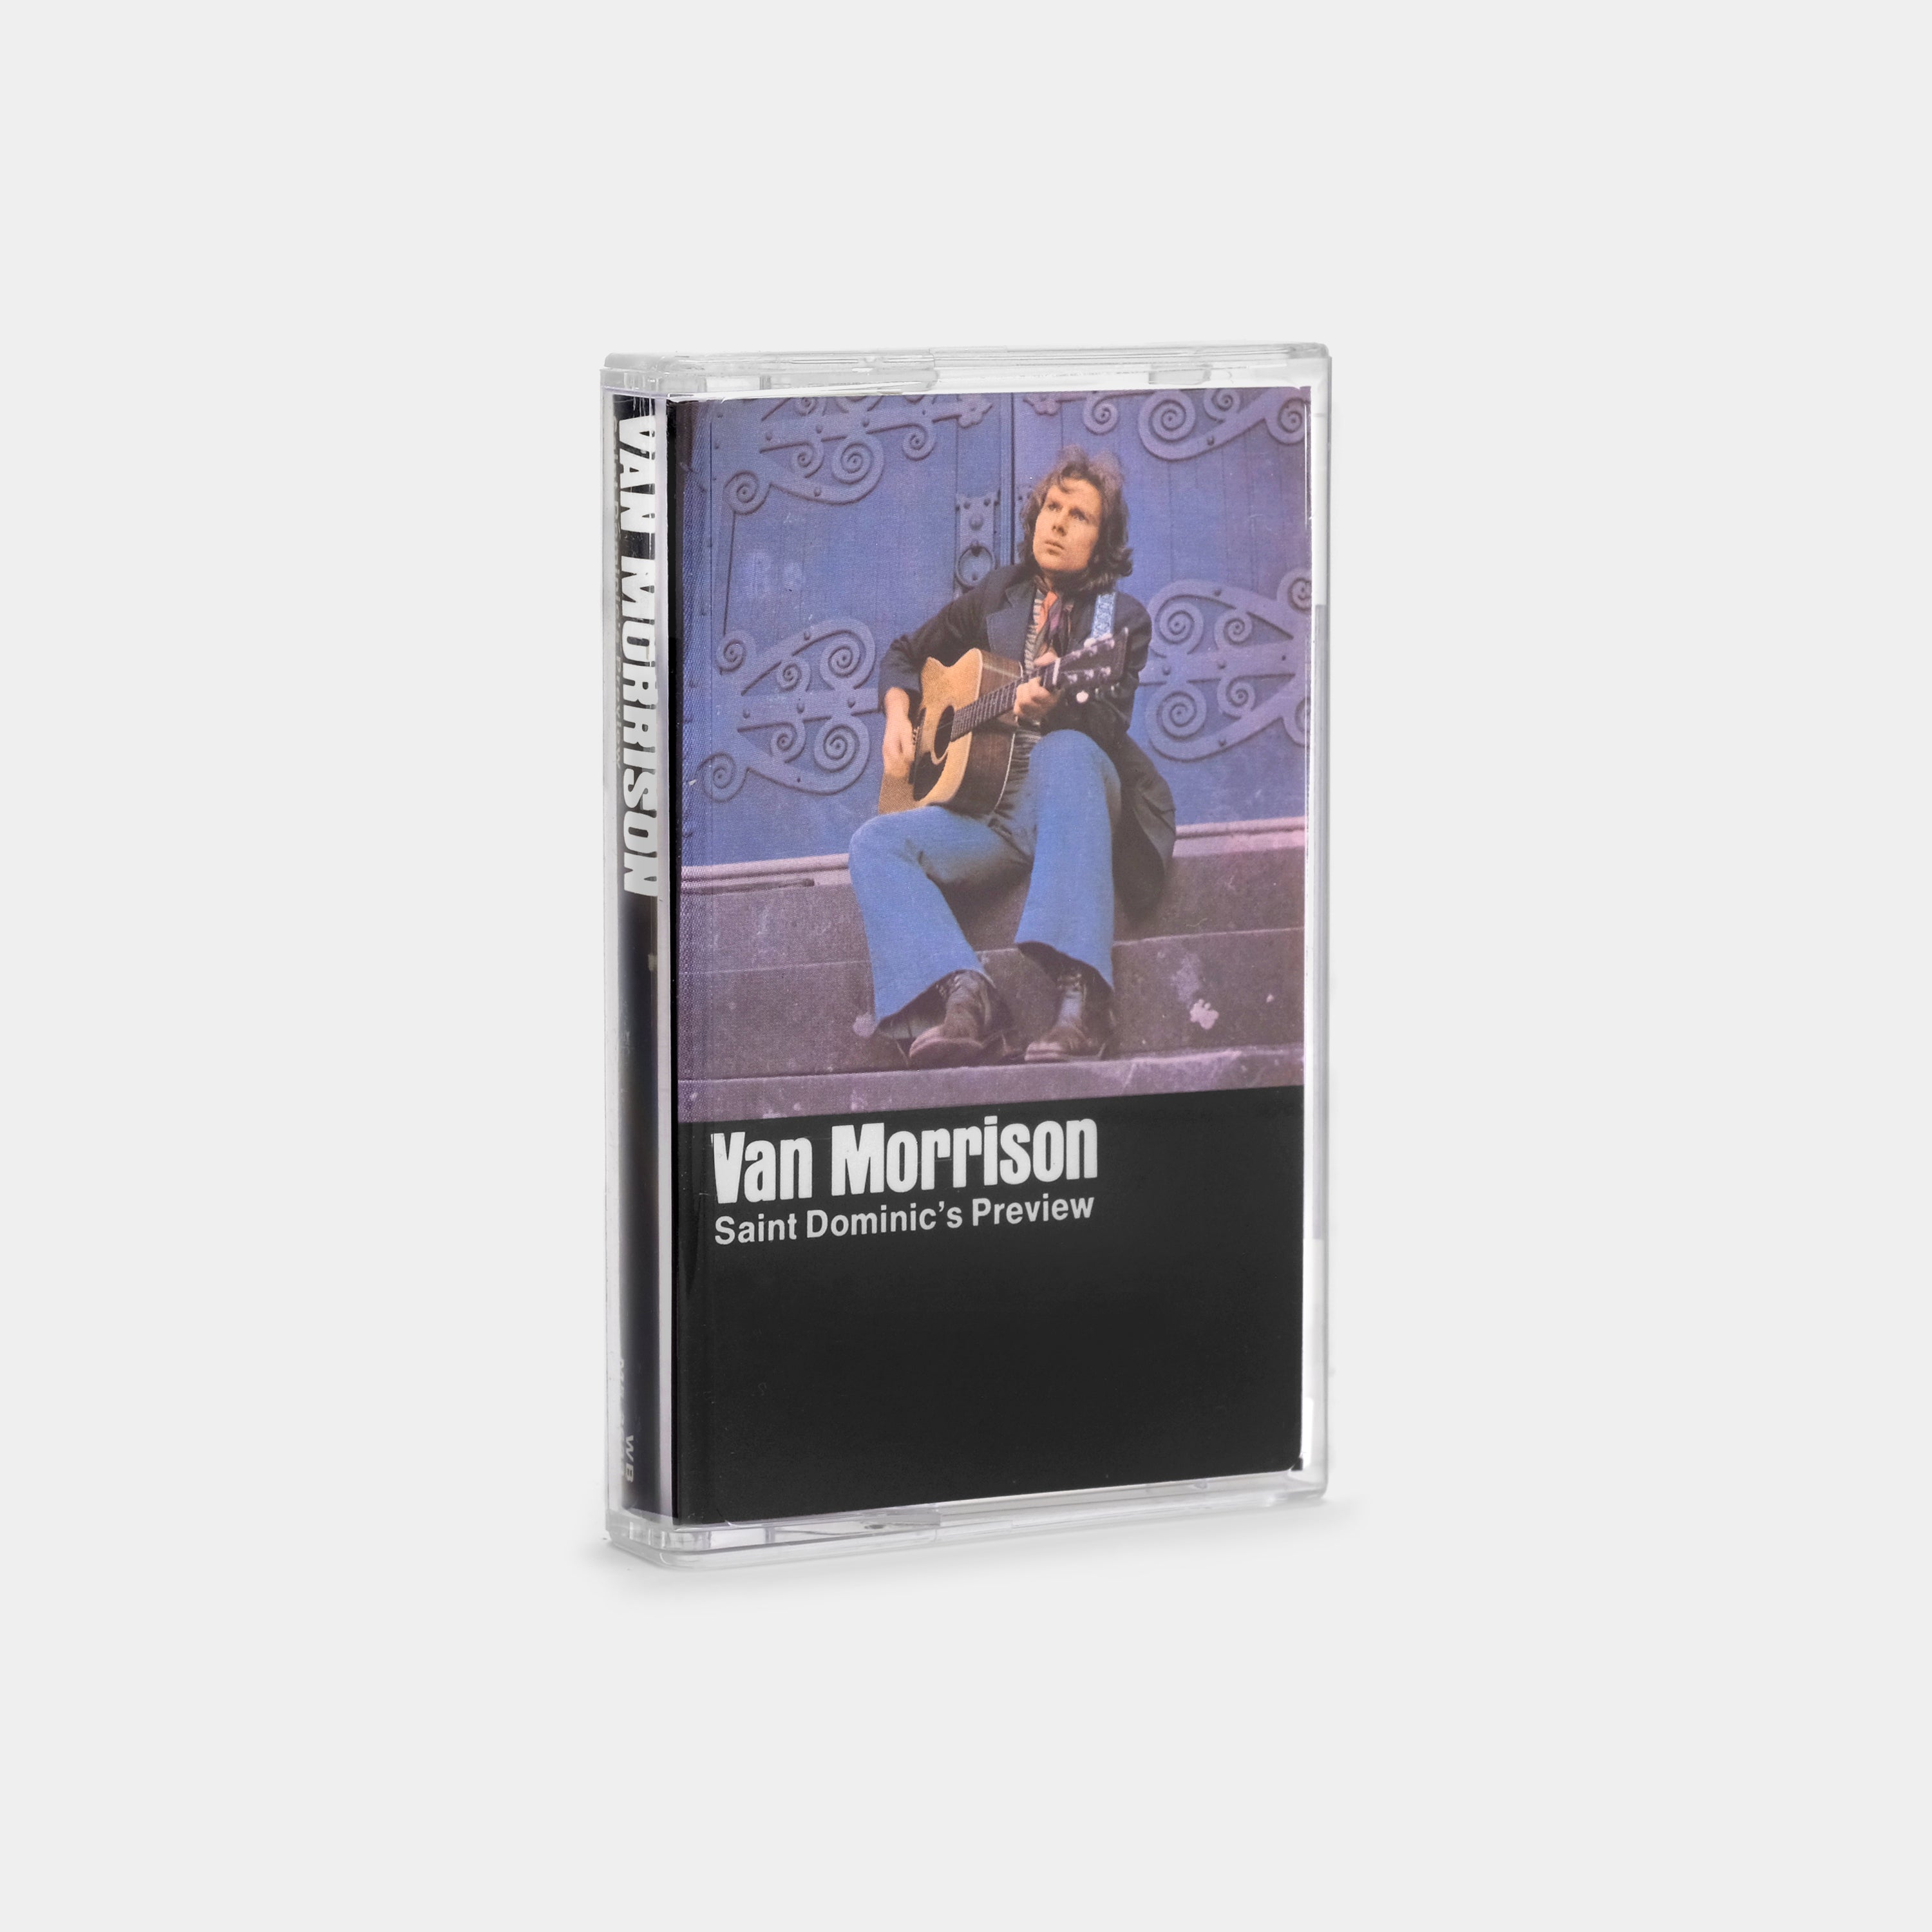 Van Morrison - Saint Dominic's Preview Cassette Tape